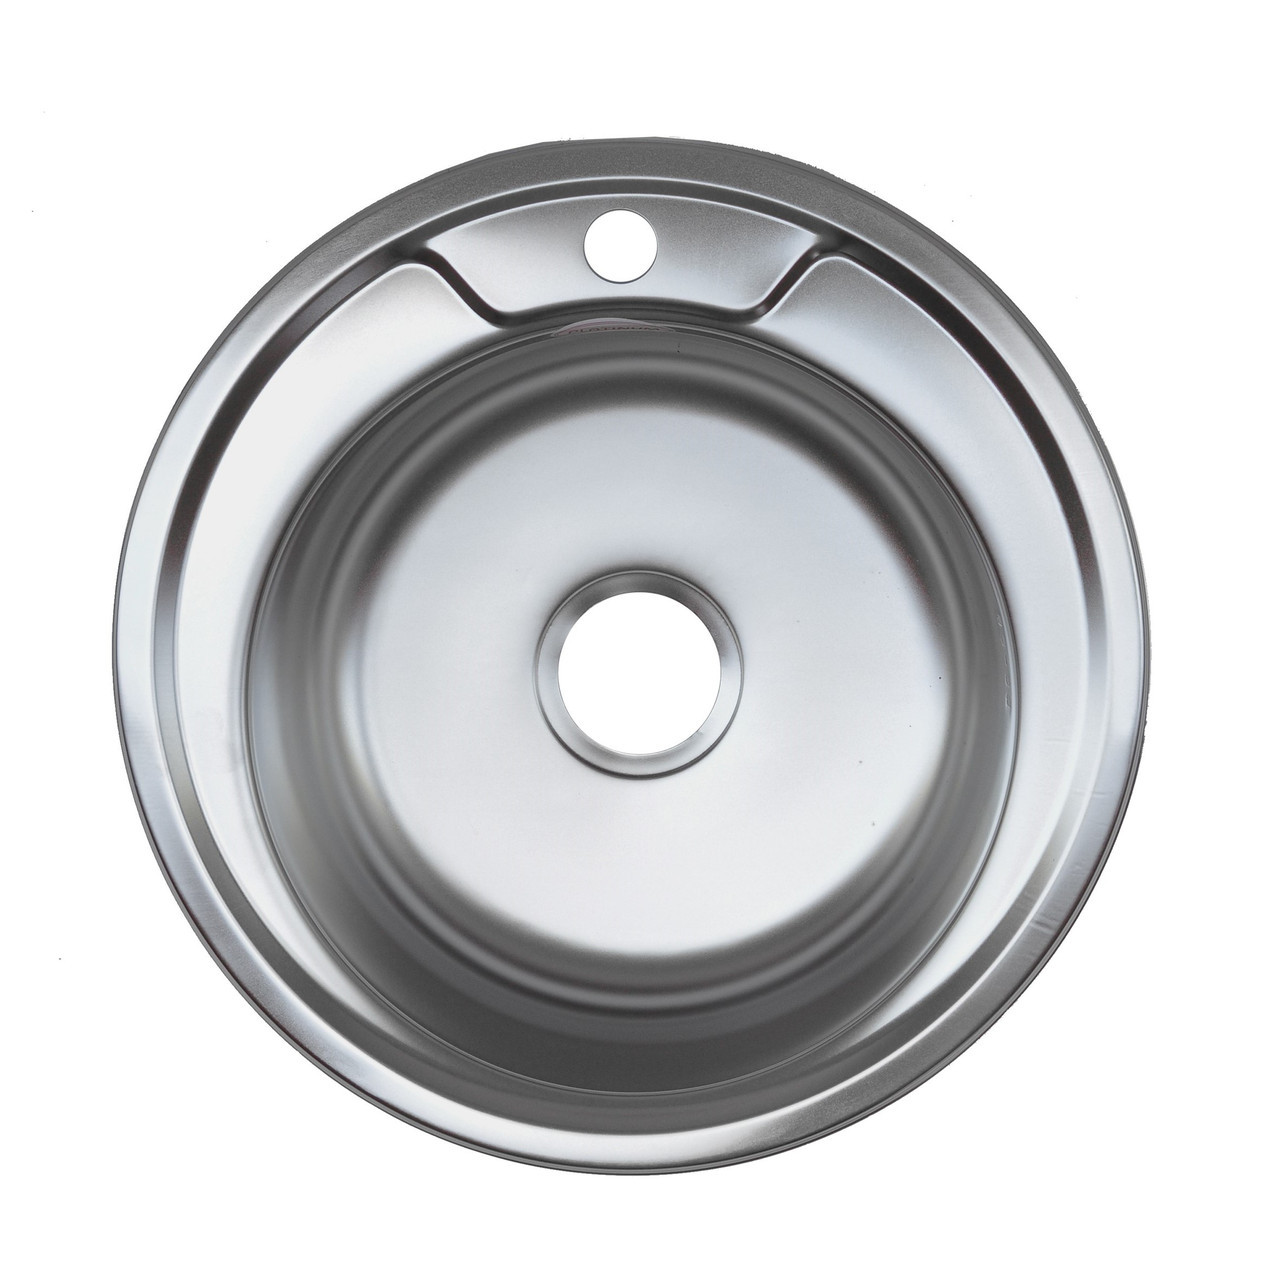  кухонная мойка Platinum 450 Decor 0,6мм круглая: продажа, цена .